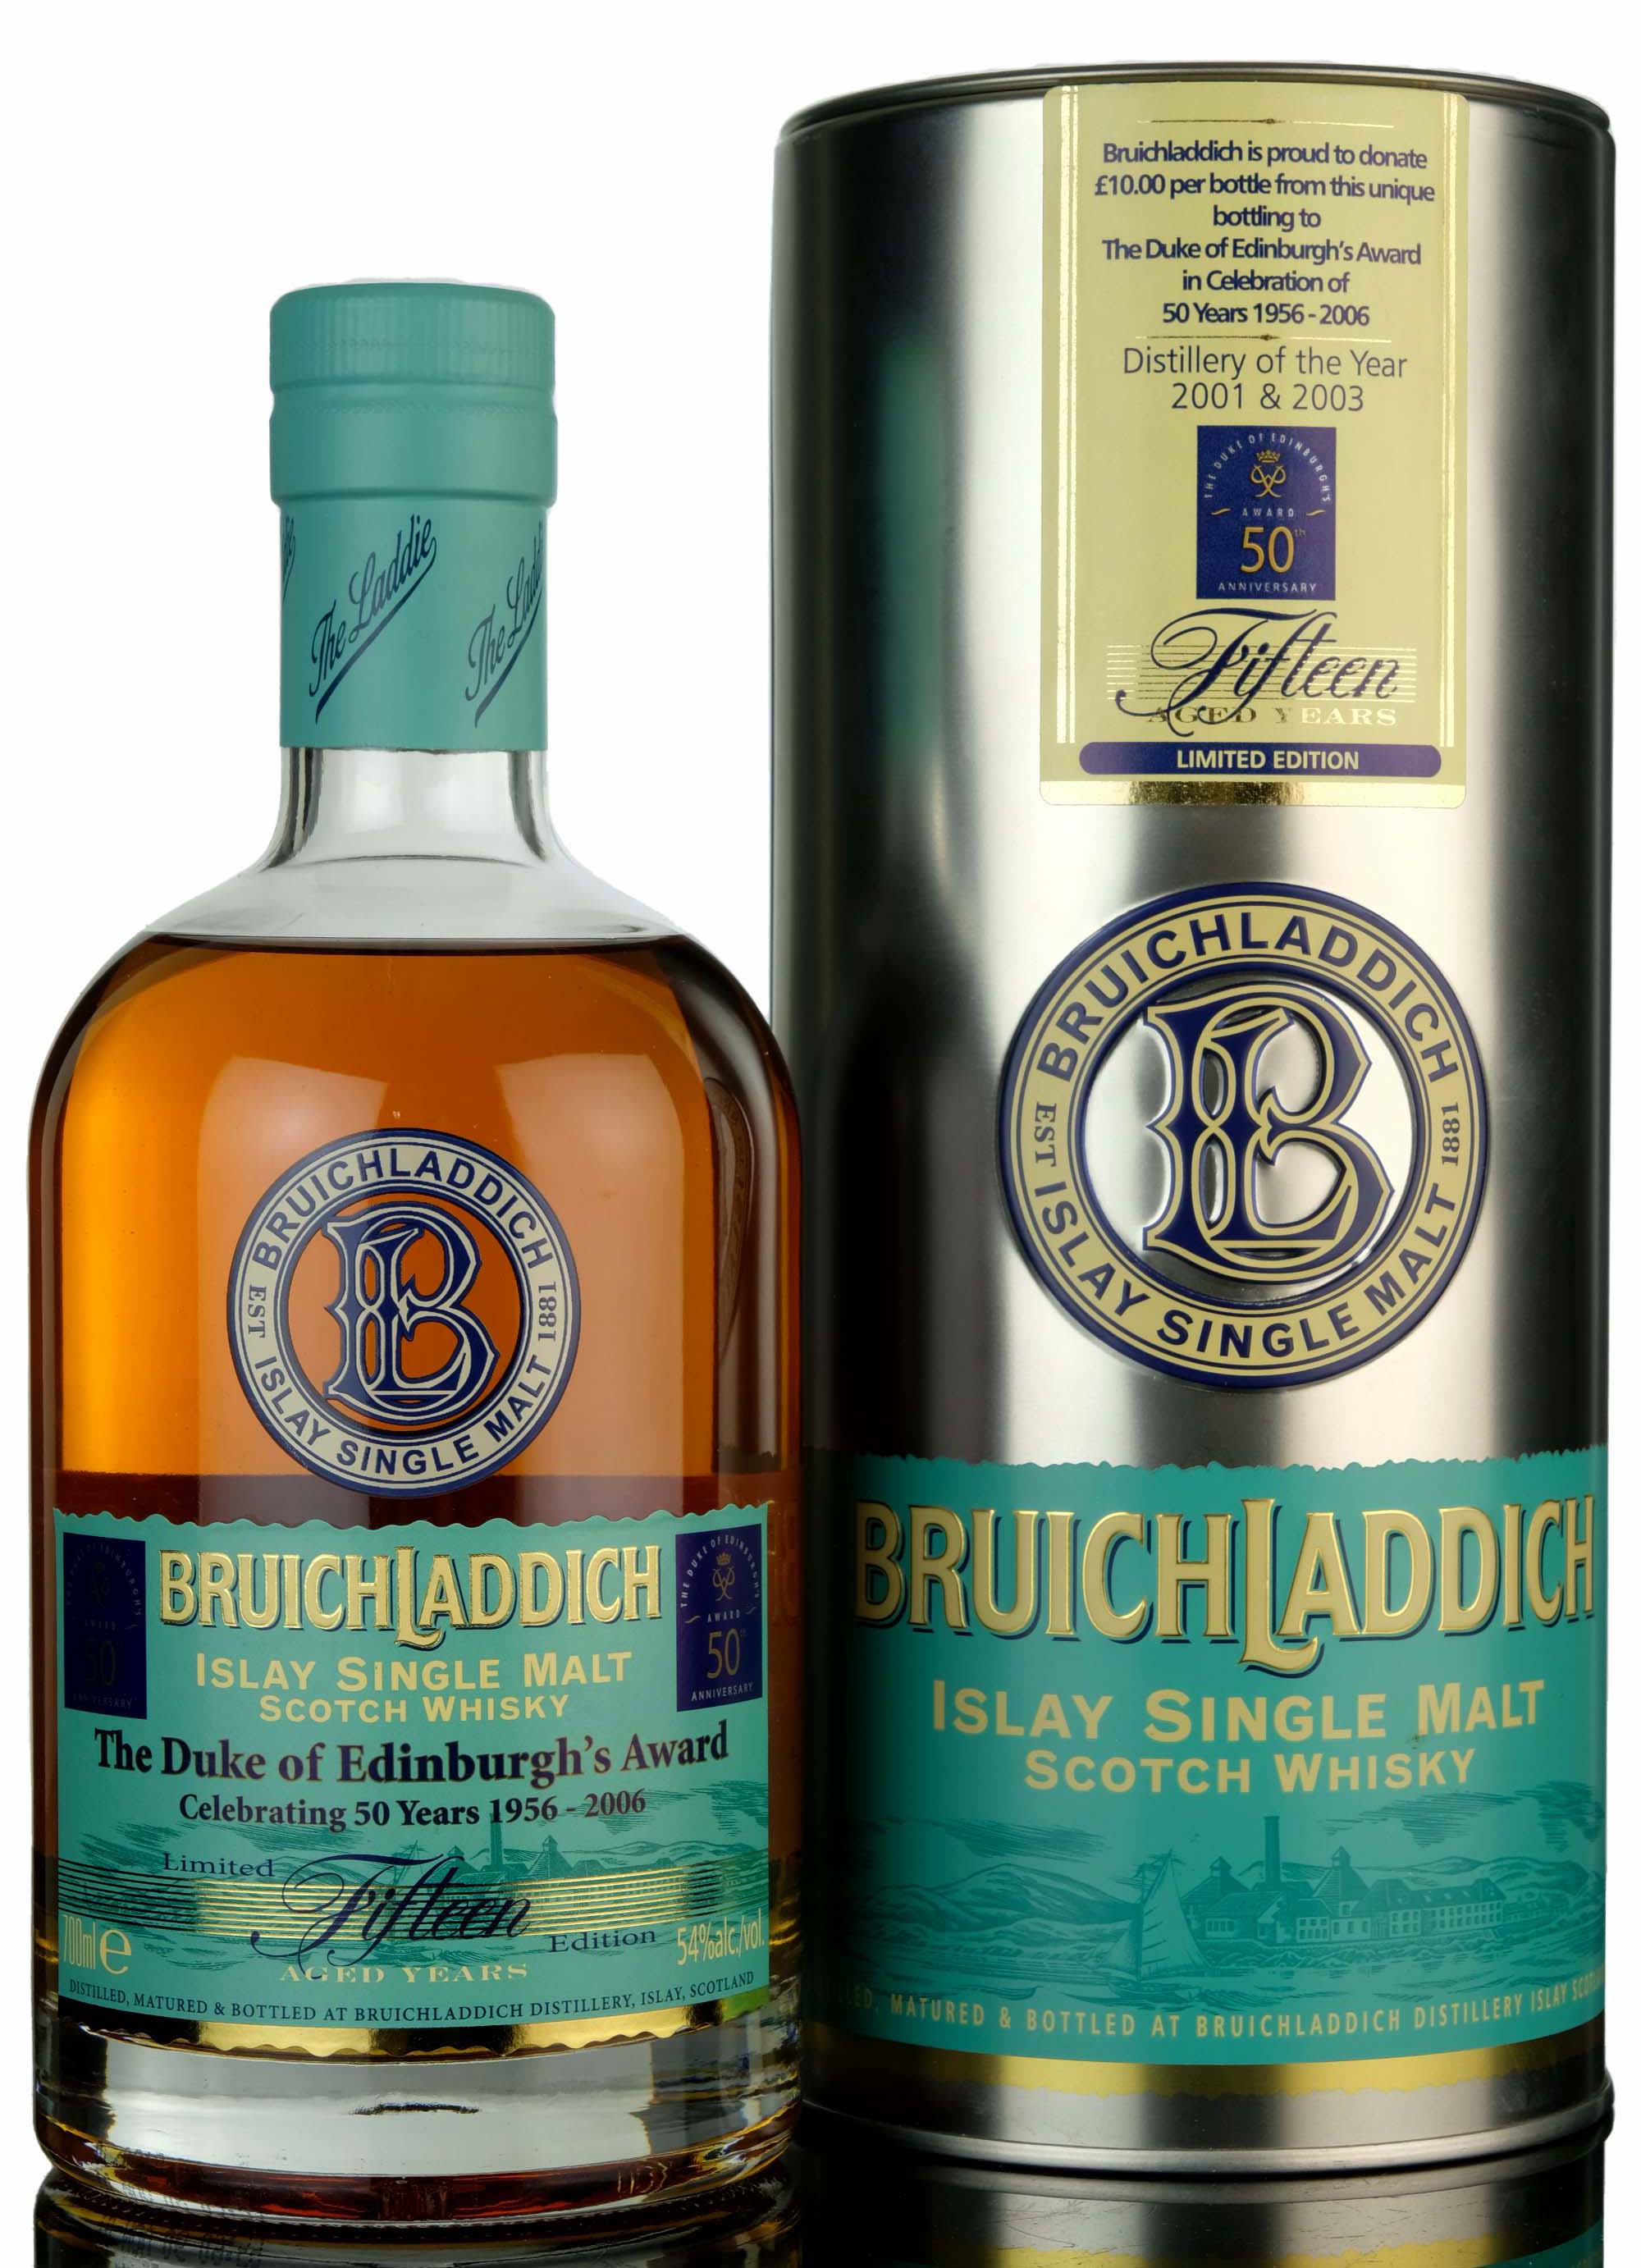 Bruichladdich 15 Year Old - The Duke Of Edinburgh Award Celebrating 50 Years 1956-2006